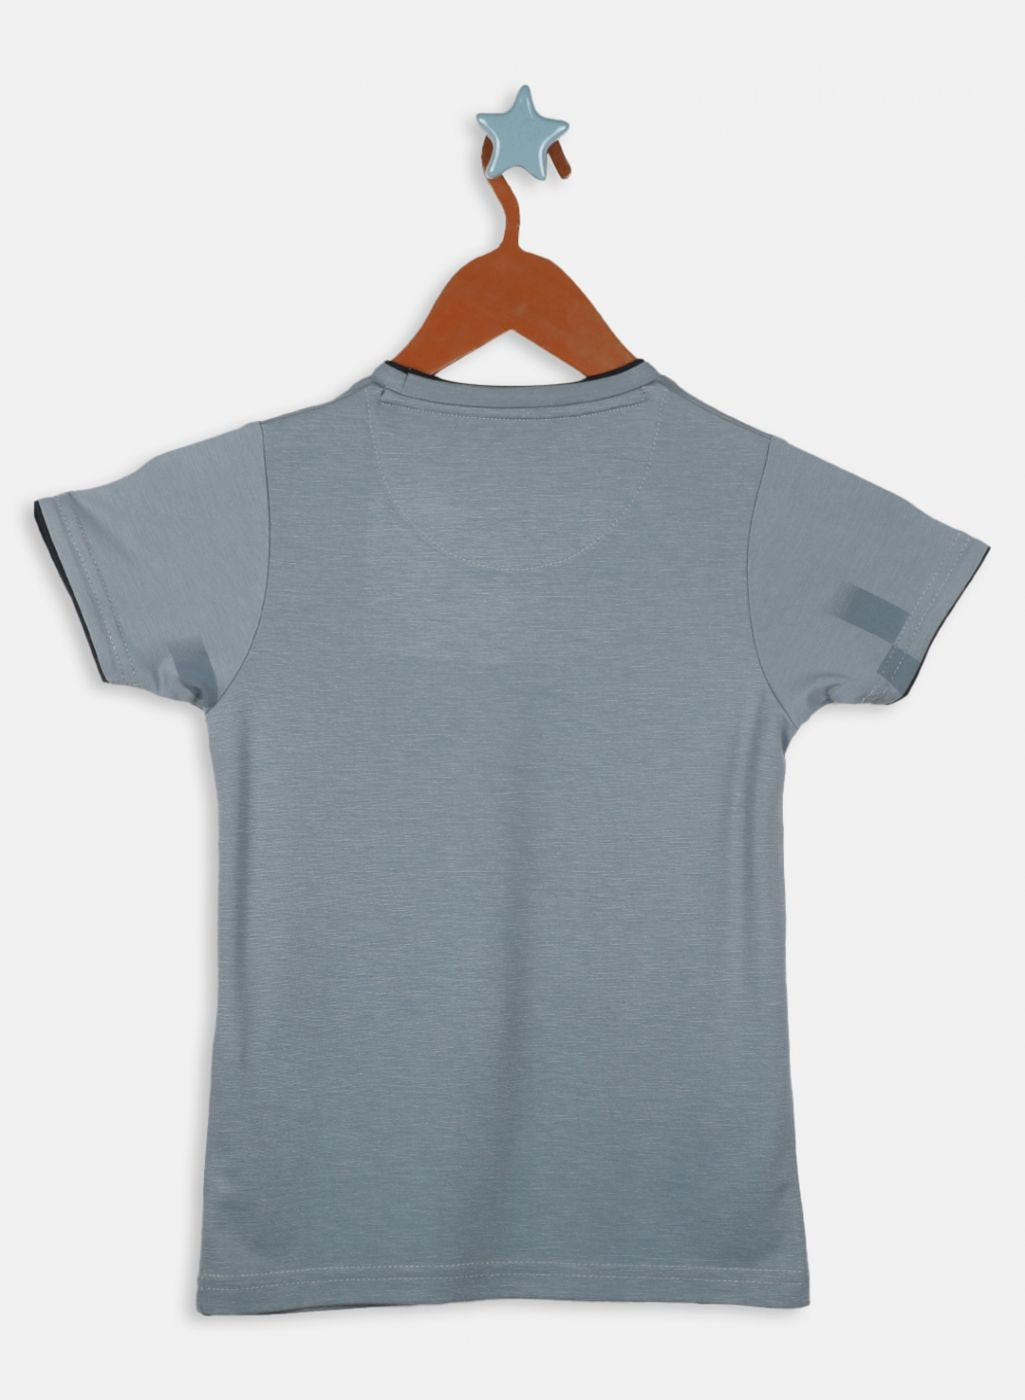 Boys Grey Printed T-Shirt